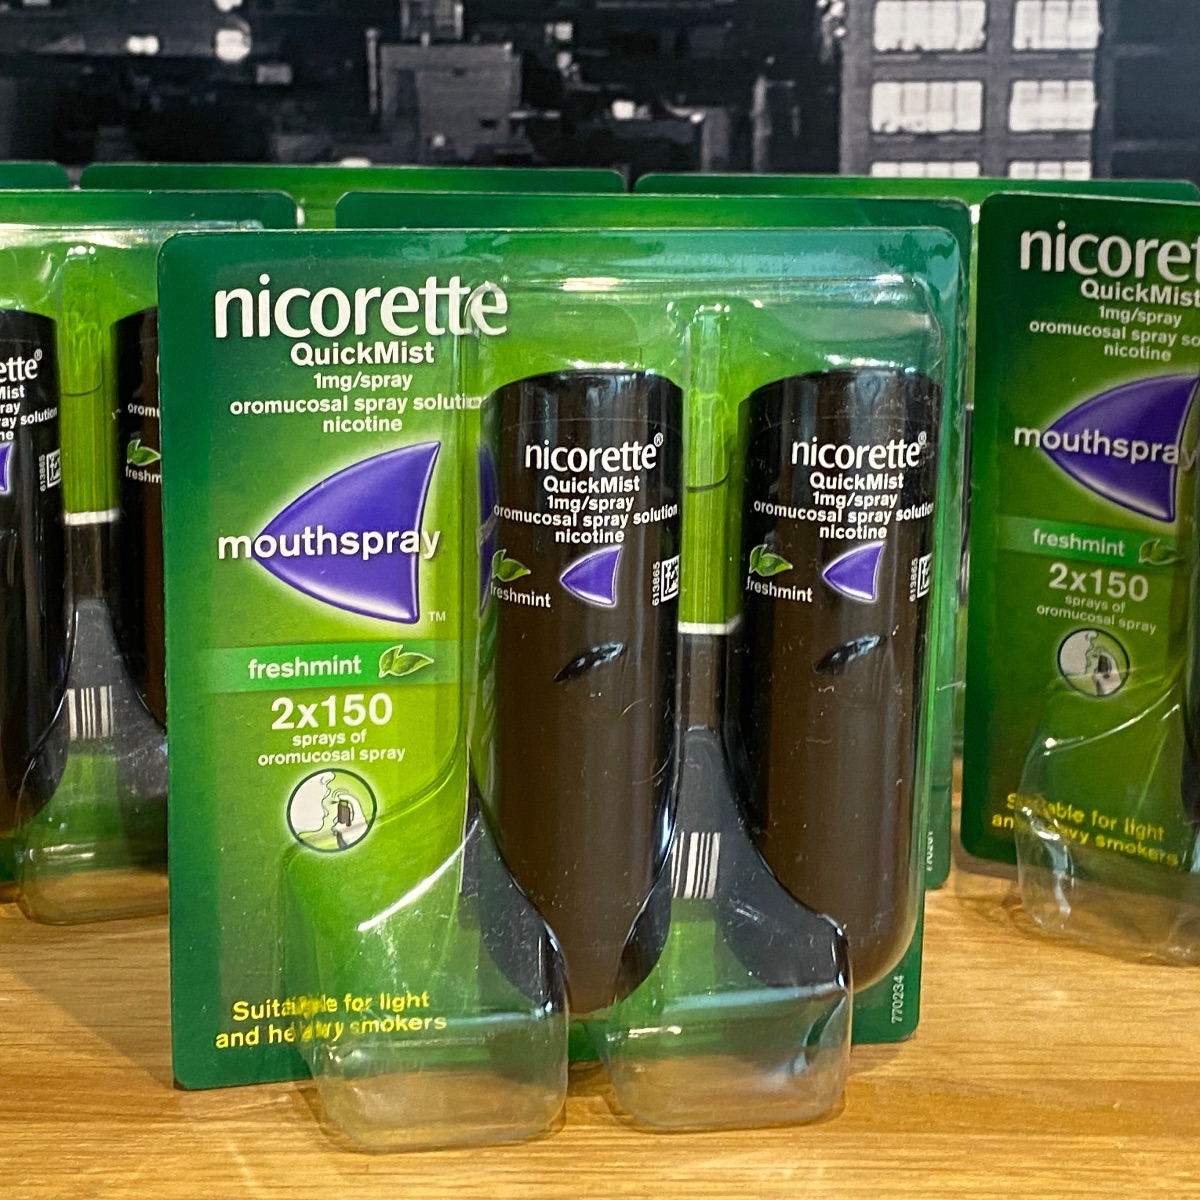 8 x Nicorette Quickmist Freshmint Mouthspray Nicotine Pack of 16 x 150 Sprays FRESHMINT DoesNotApply (Brand New)